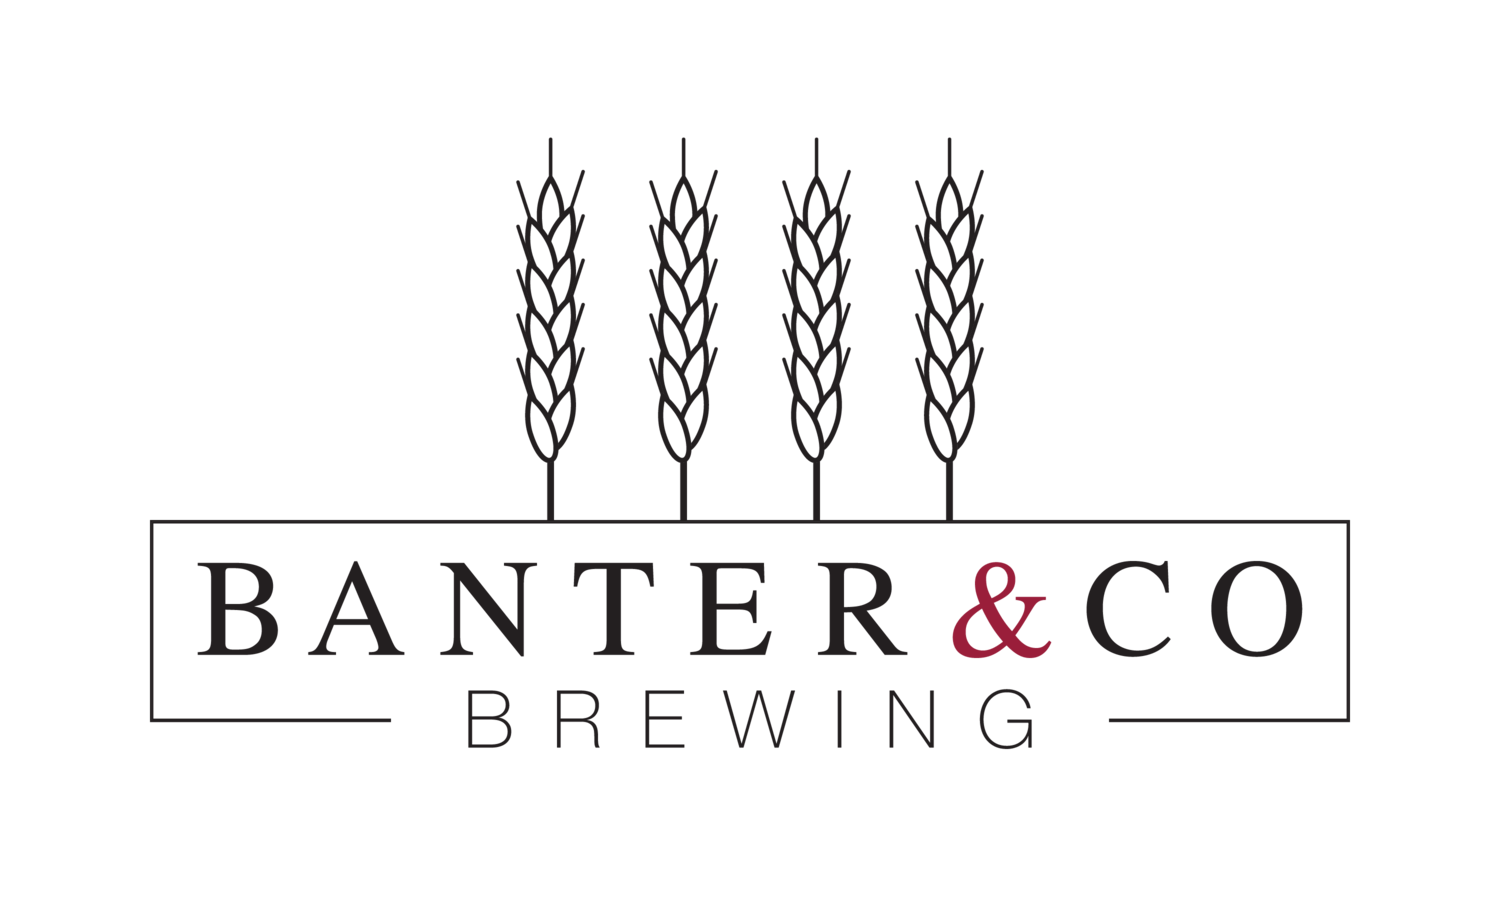 Banter and Co. Brewing logo.